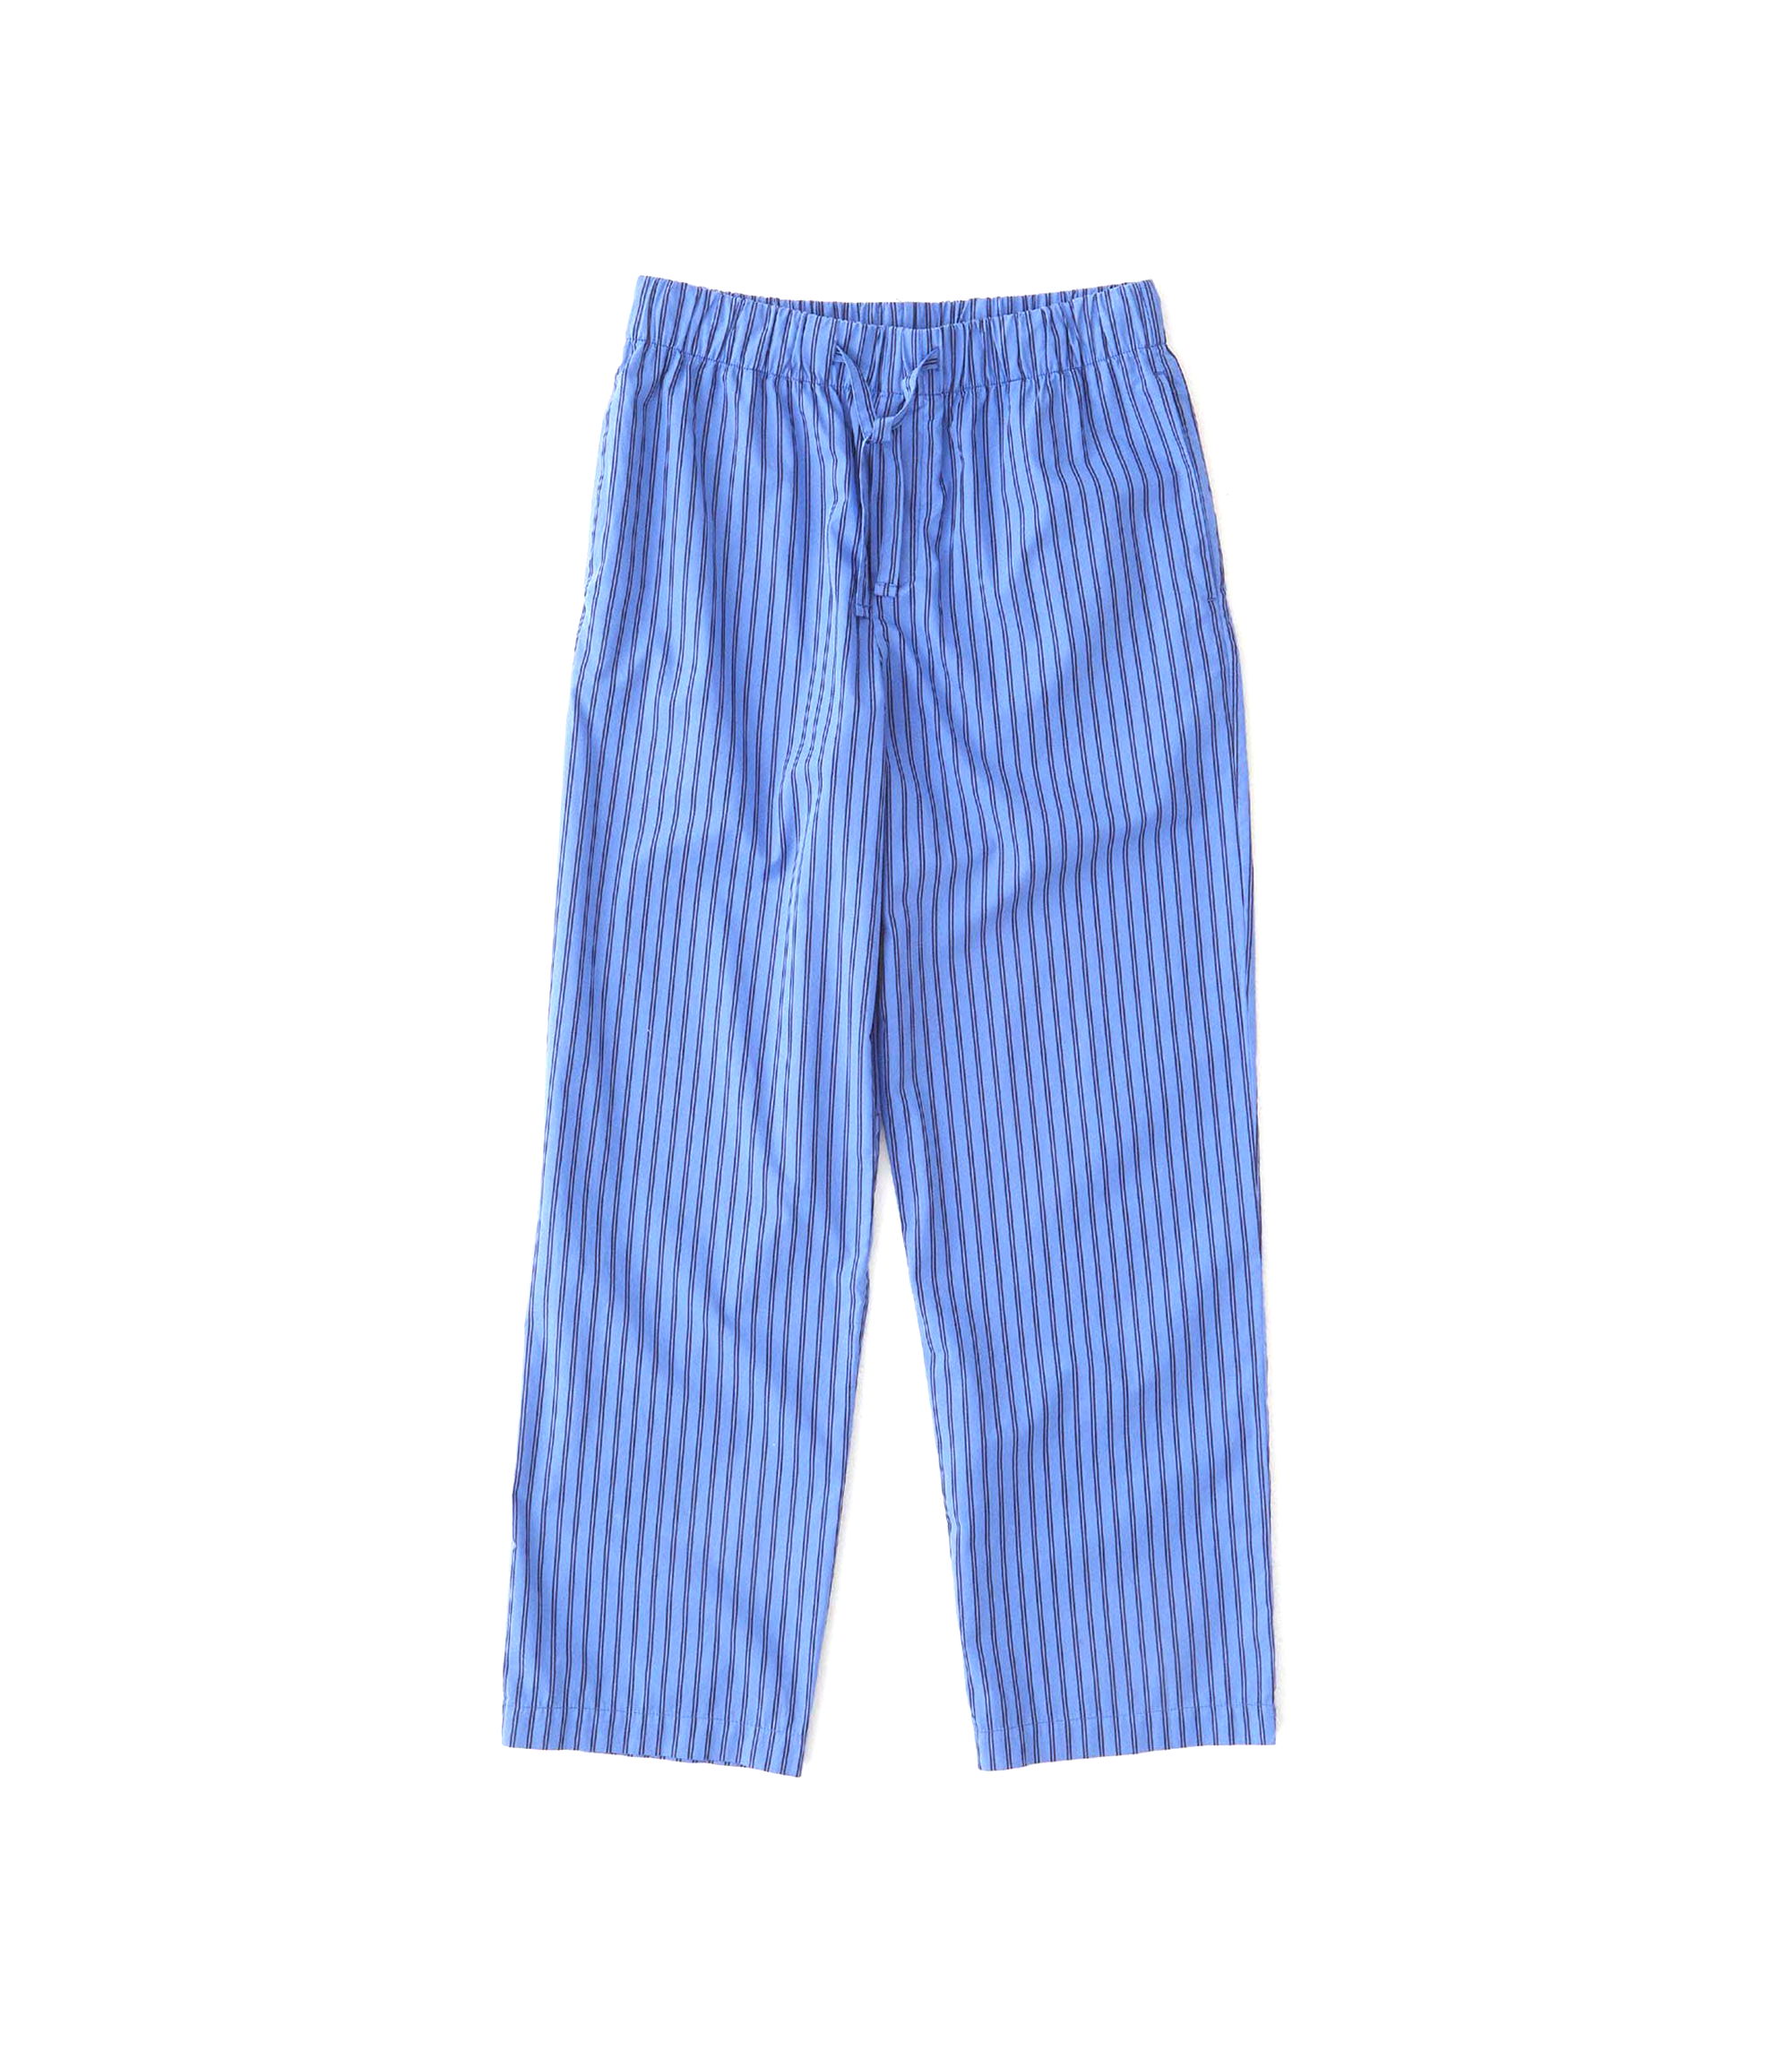 Sleepwear (Poplin) Pyjama Pant - Boro Stripes